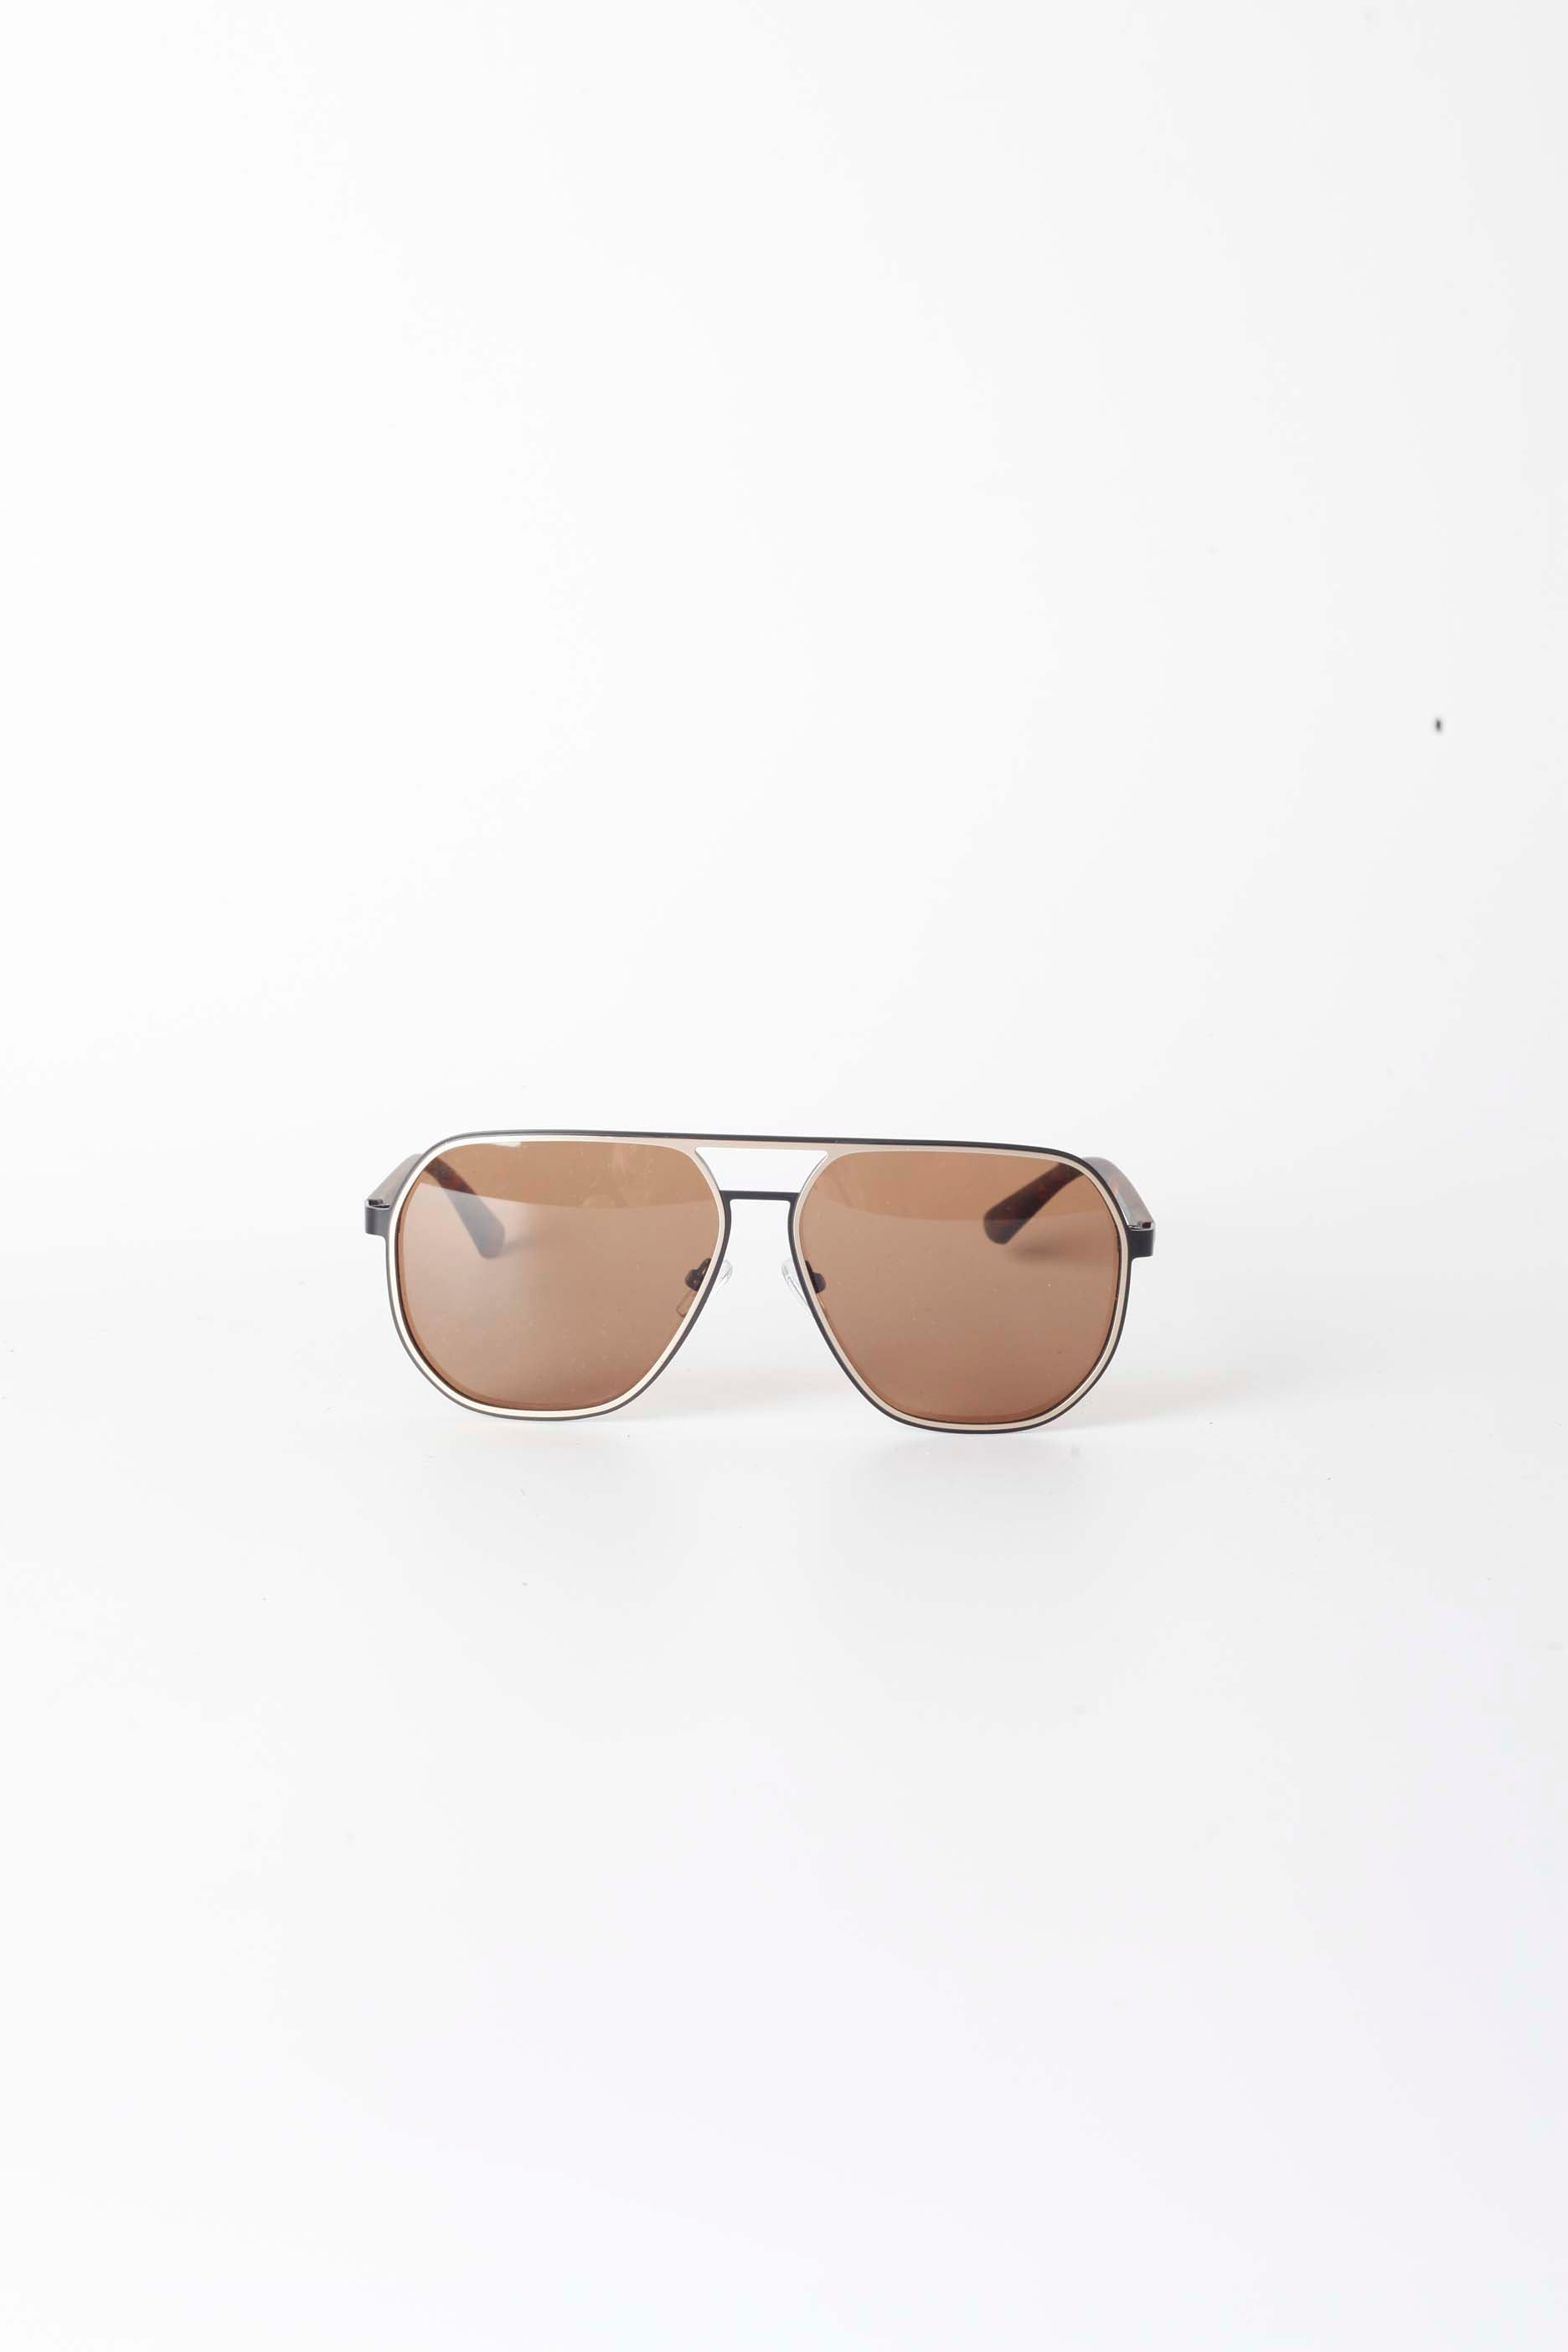 Tinted Aviator Style Sunglasses